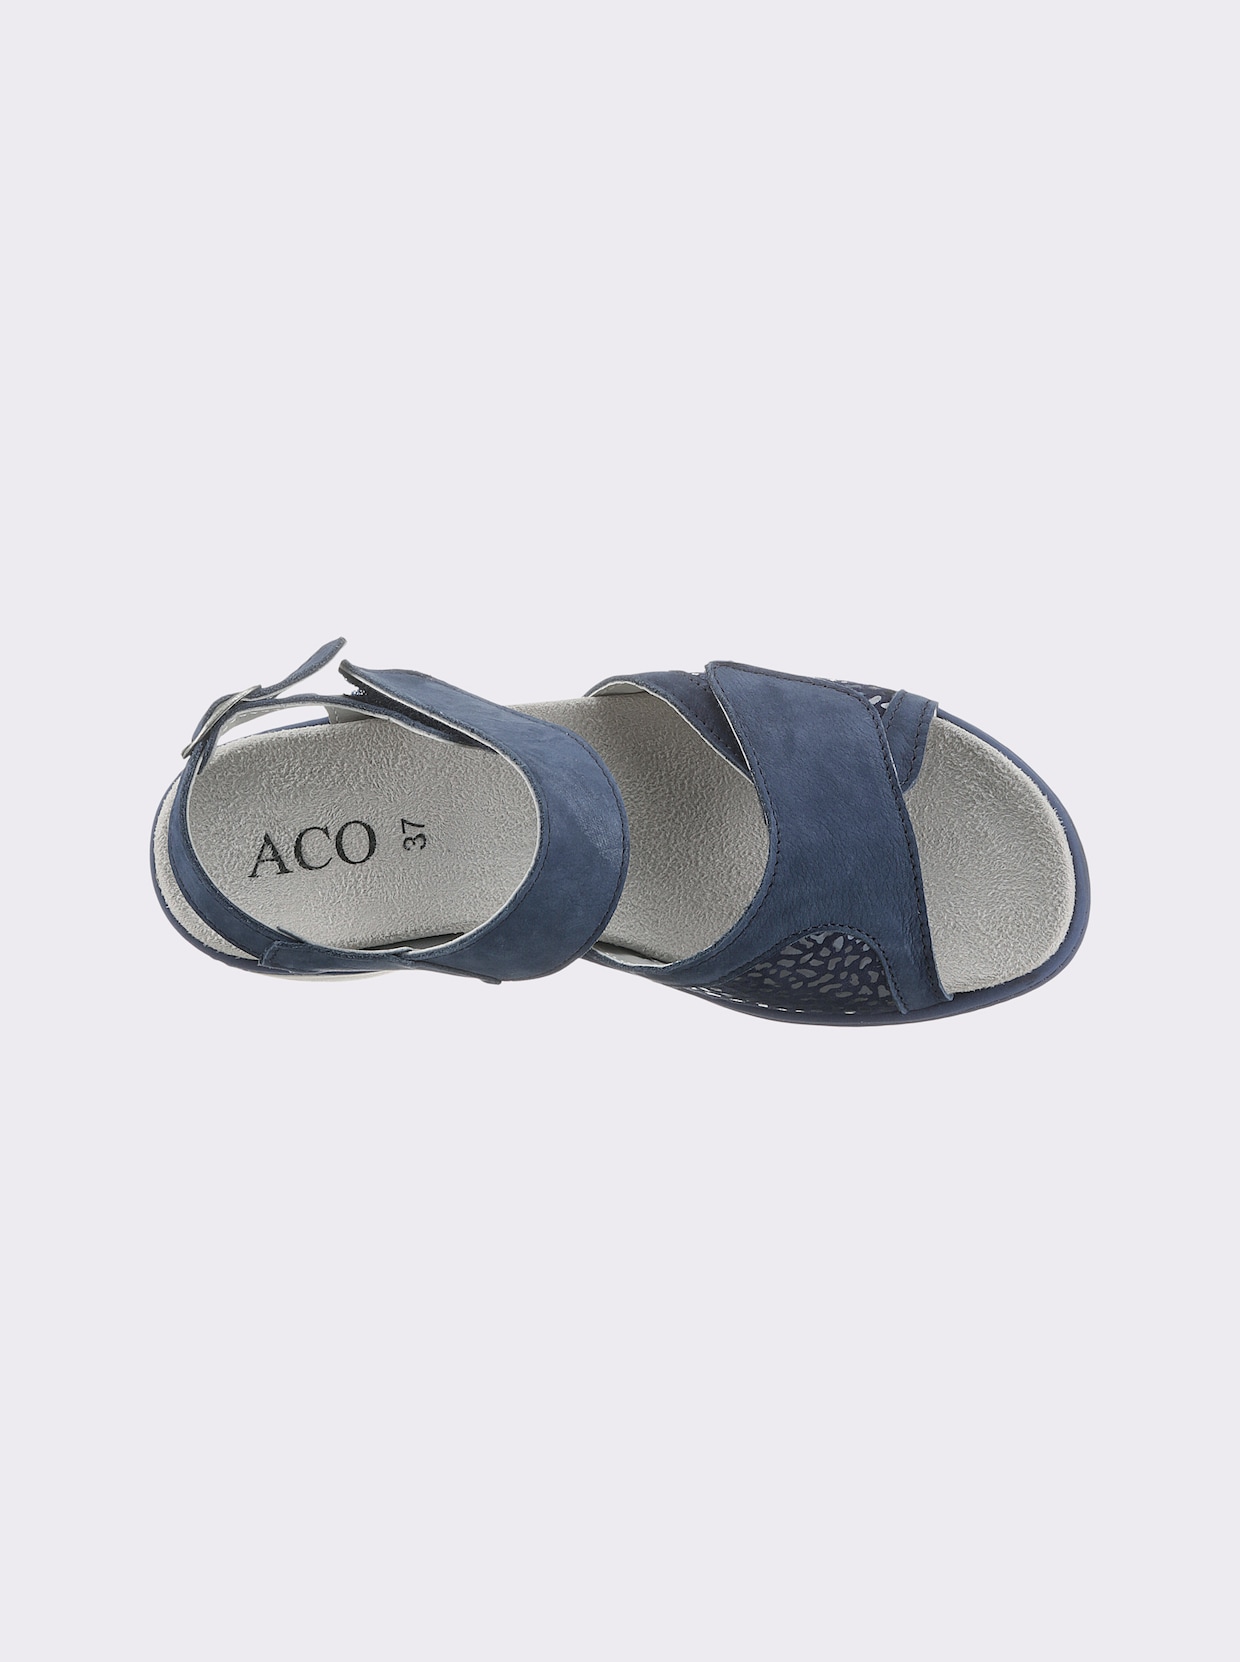 airsoft comfort+ Sandalen - jeansblauw